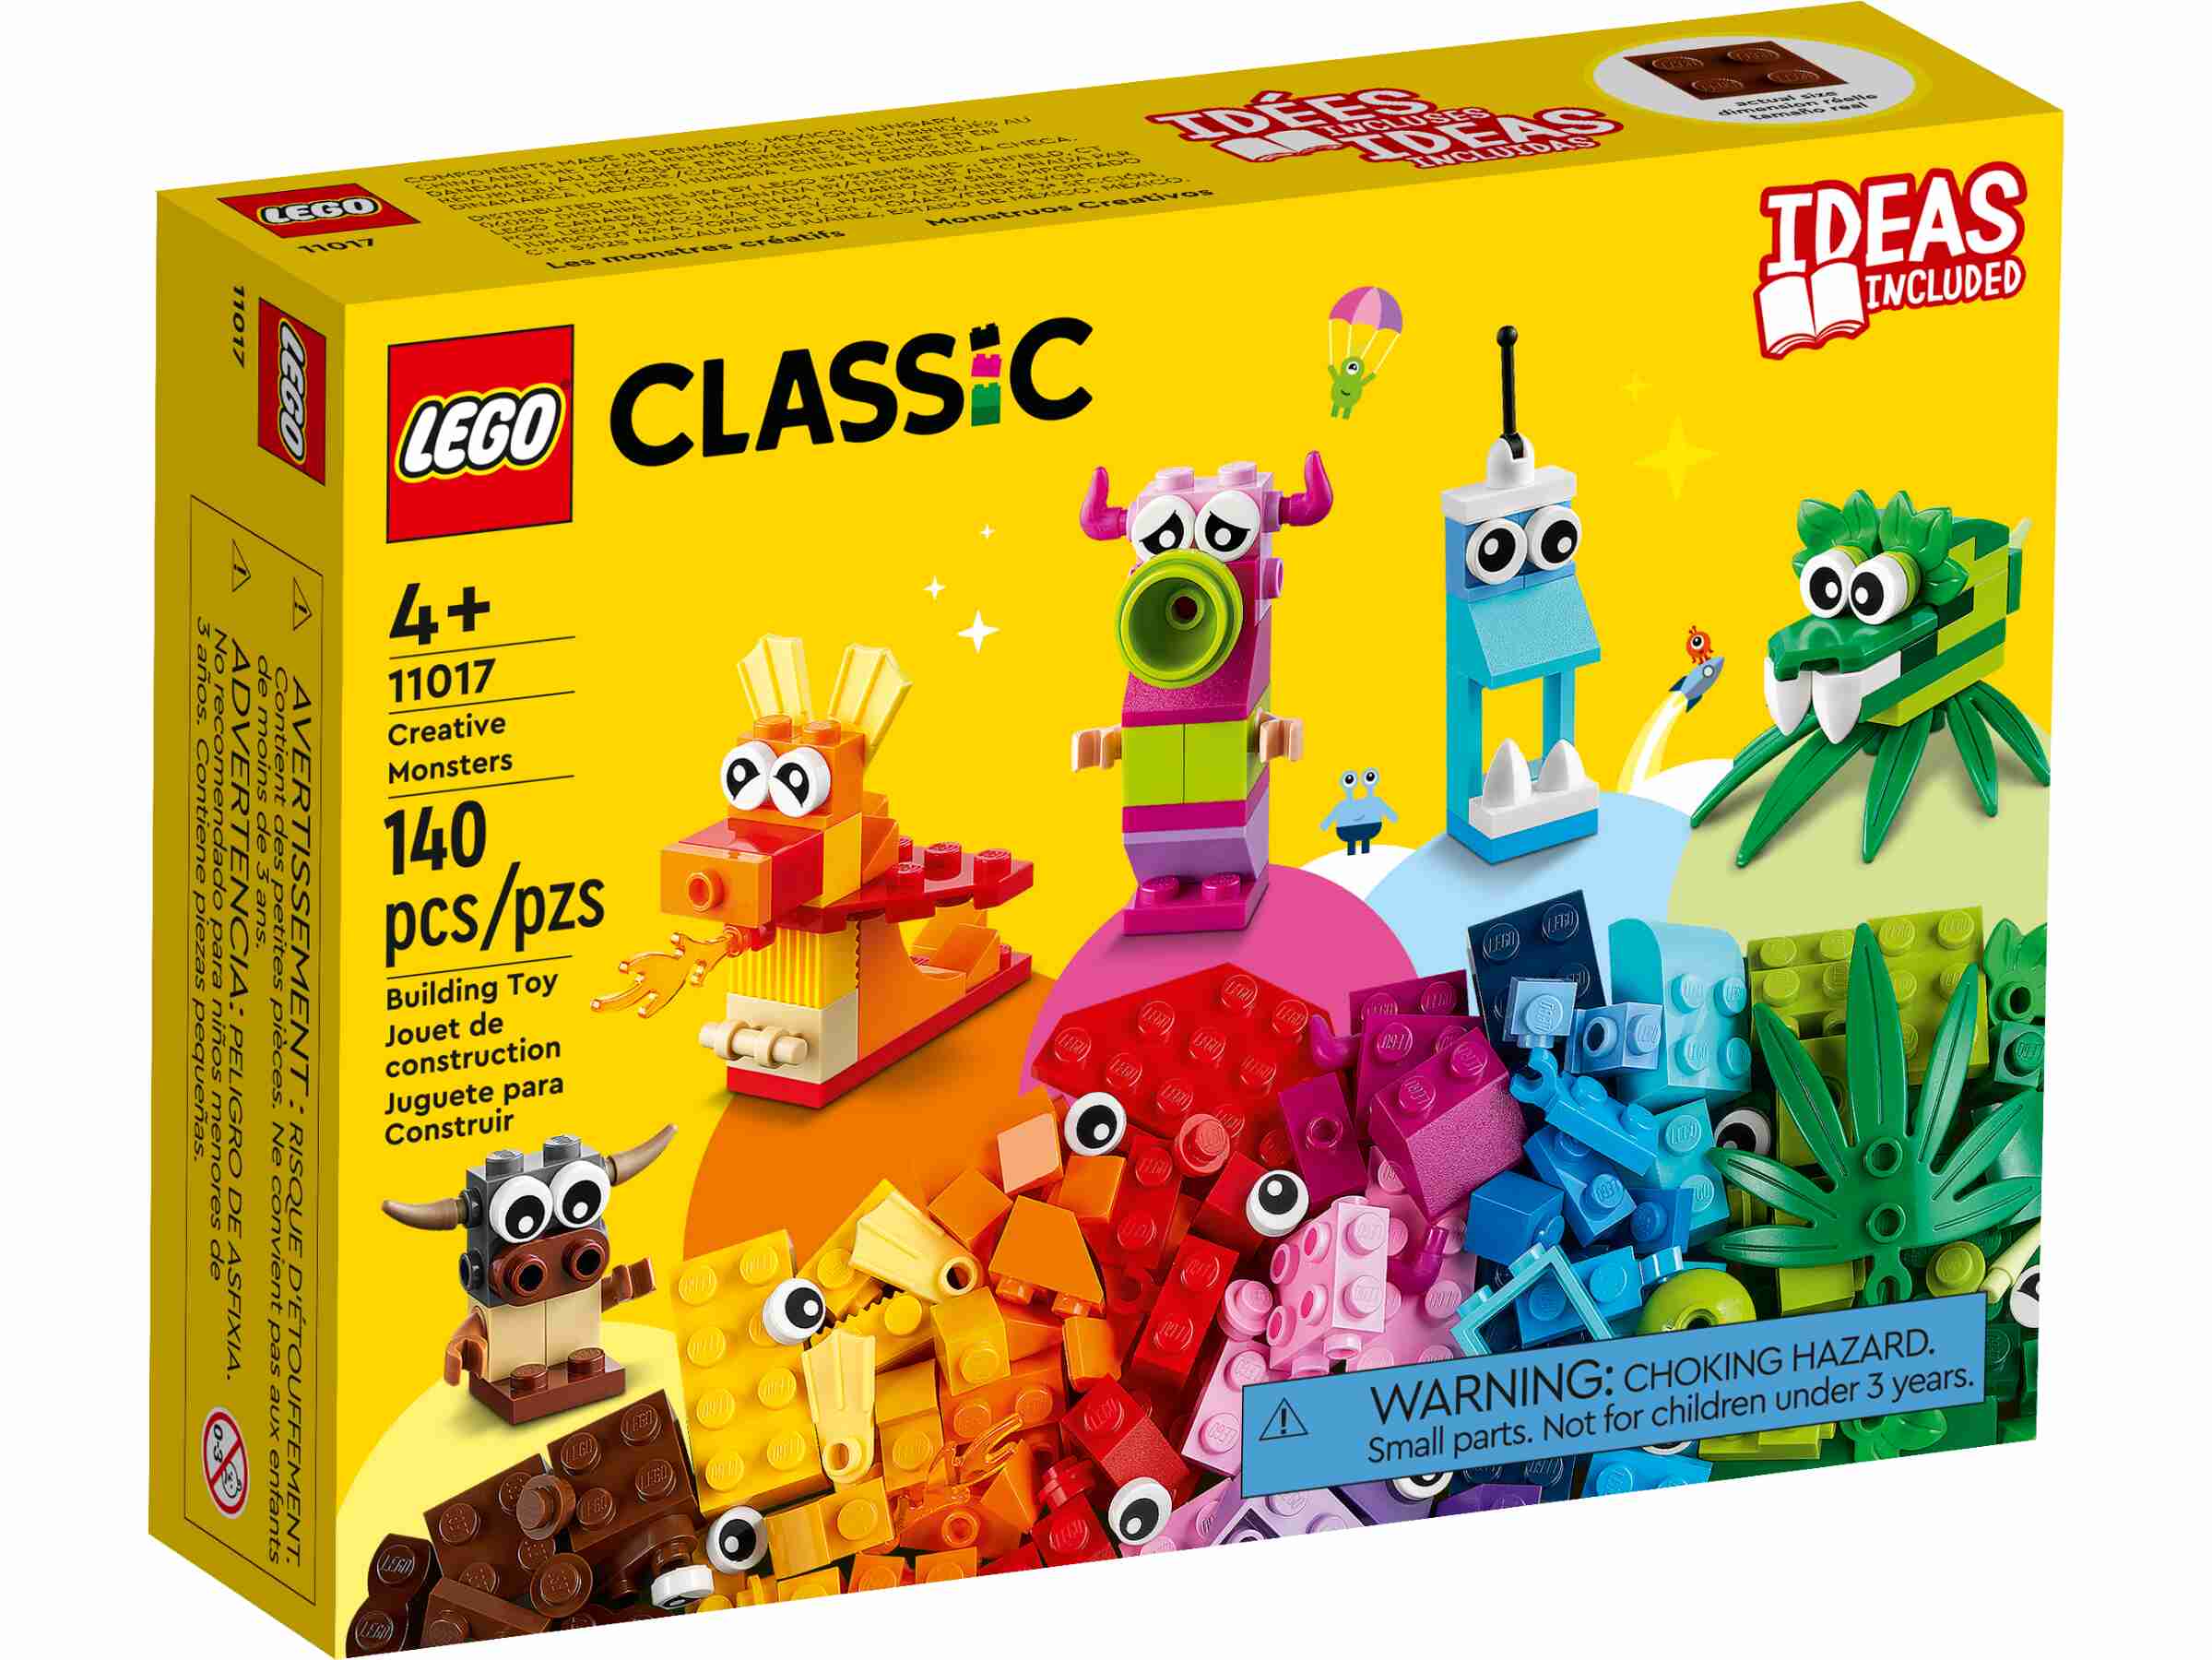 11017 Monsters, ideas: Lobigo.co.uk: build 5 Classic Toys monster toy Creative LEGO